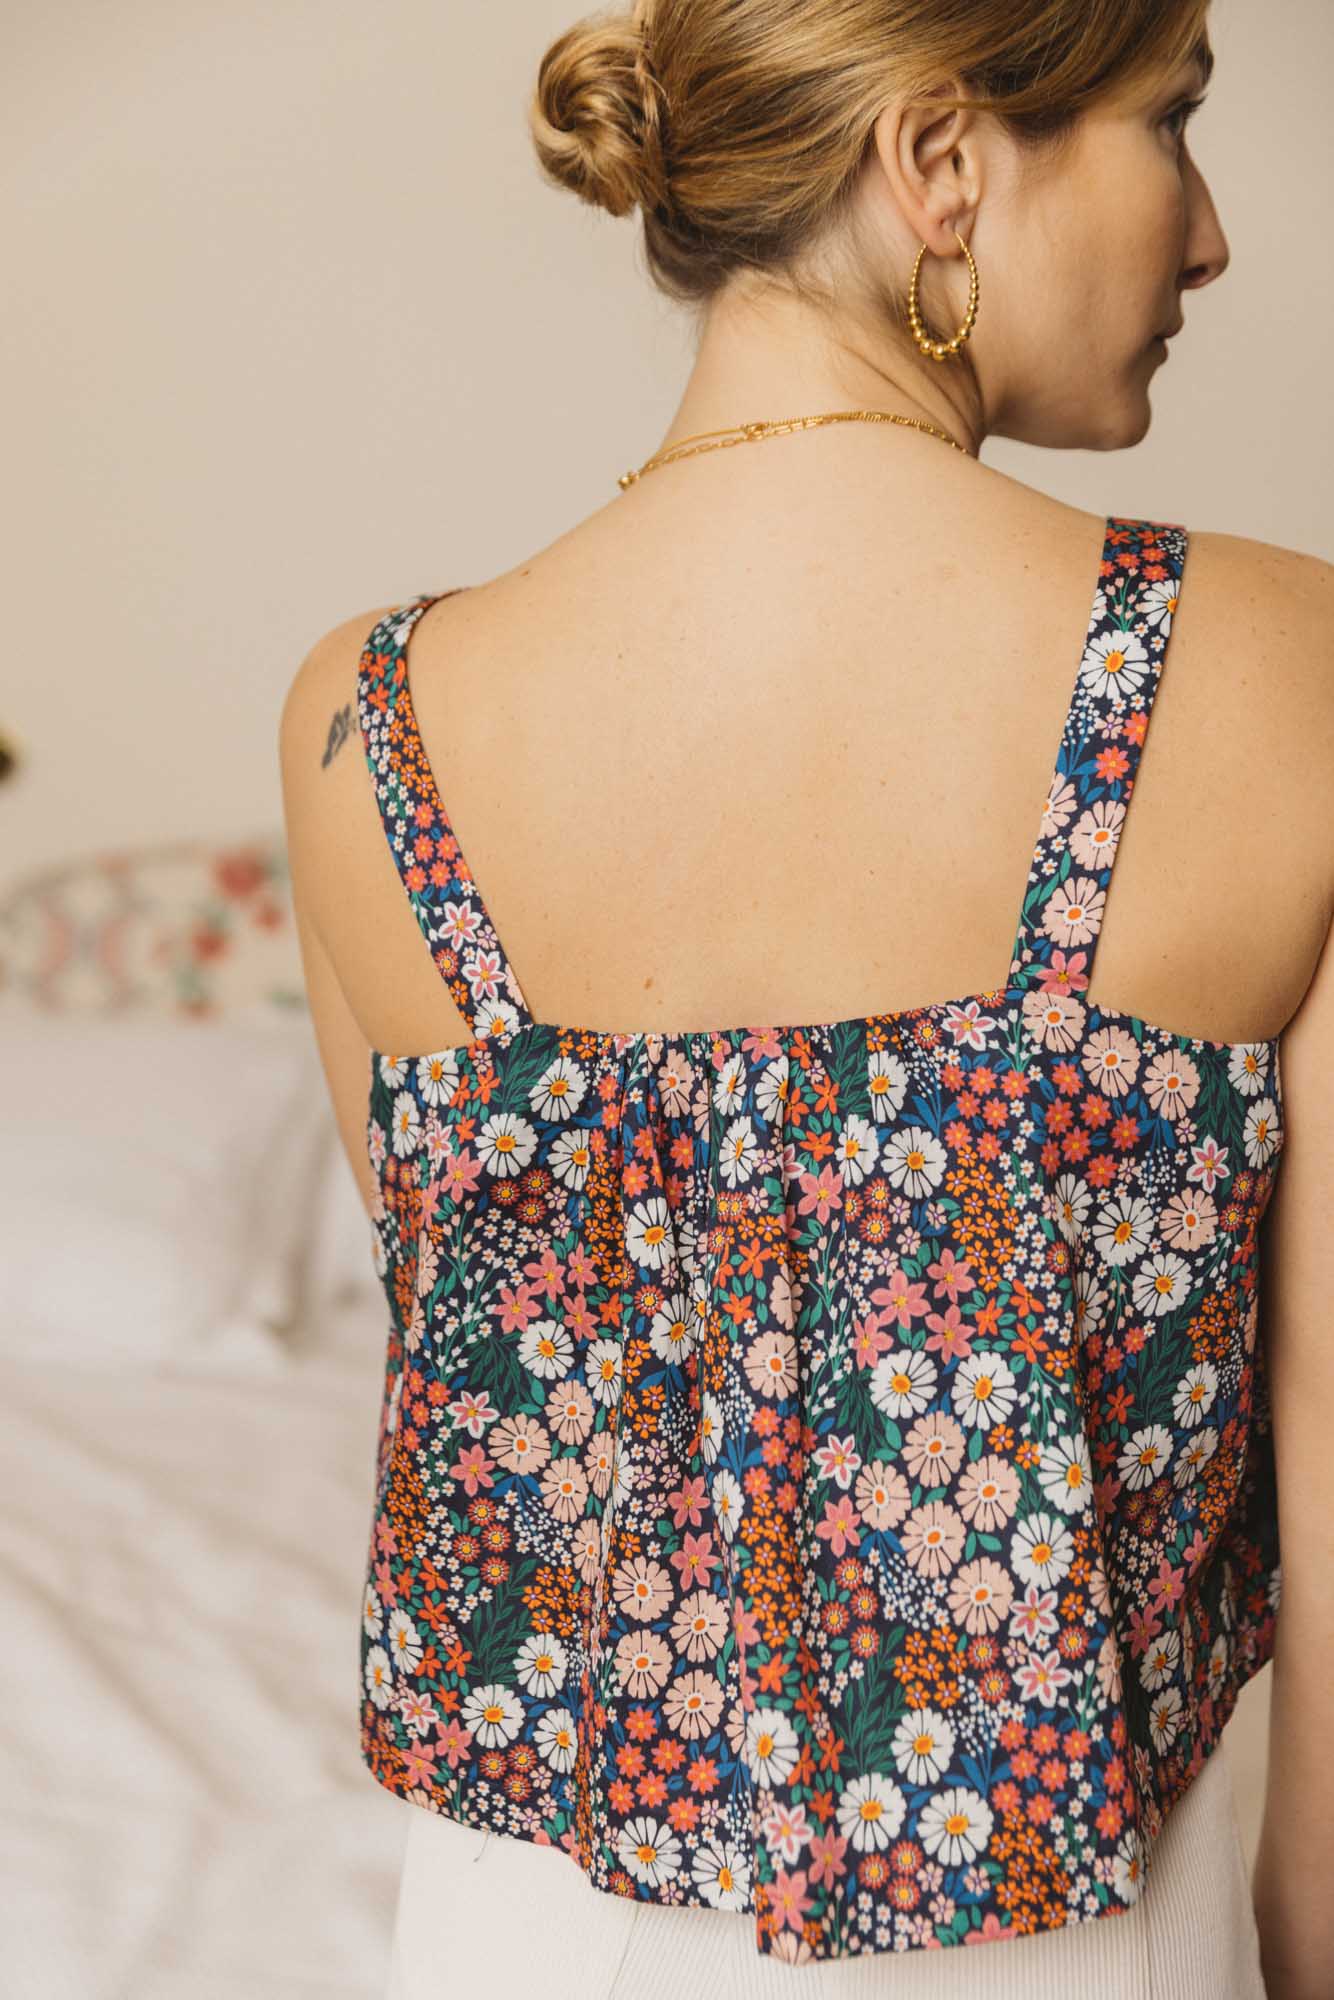 Yoga camisole with daisy print